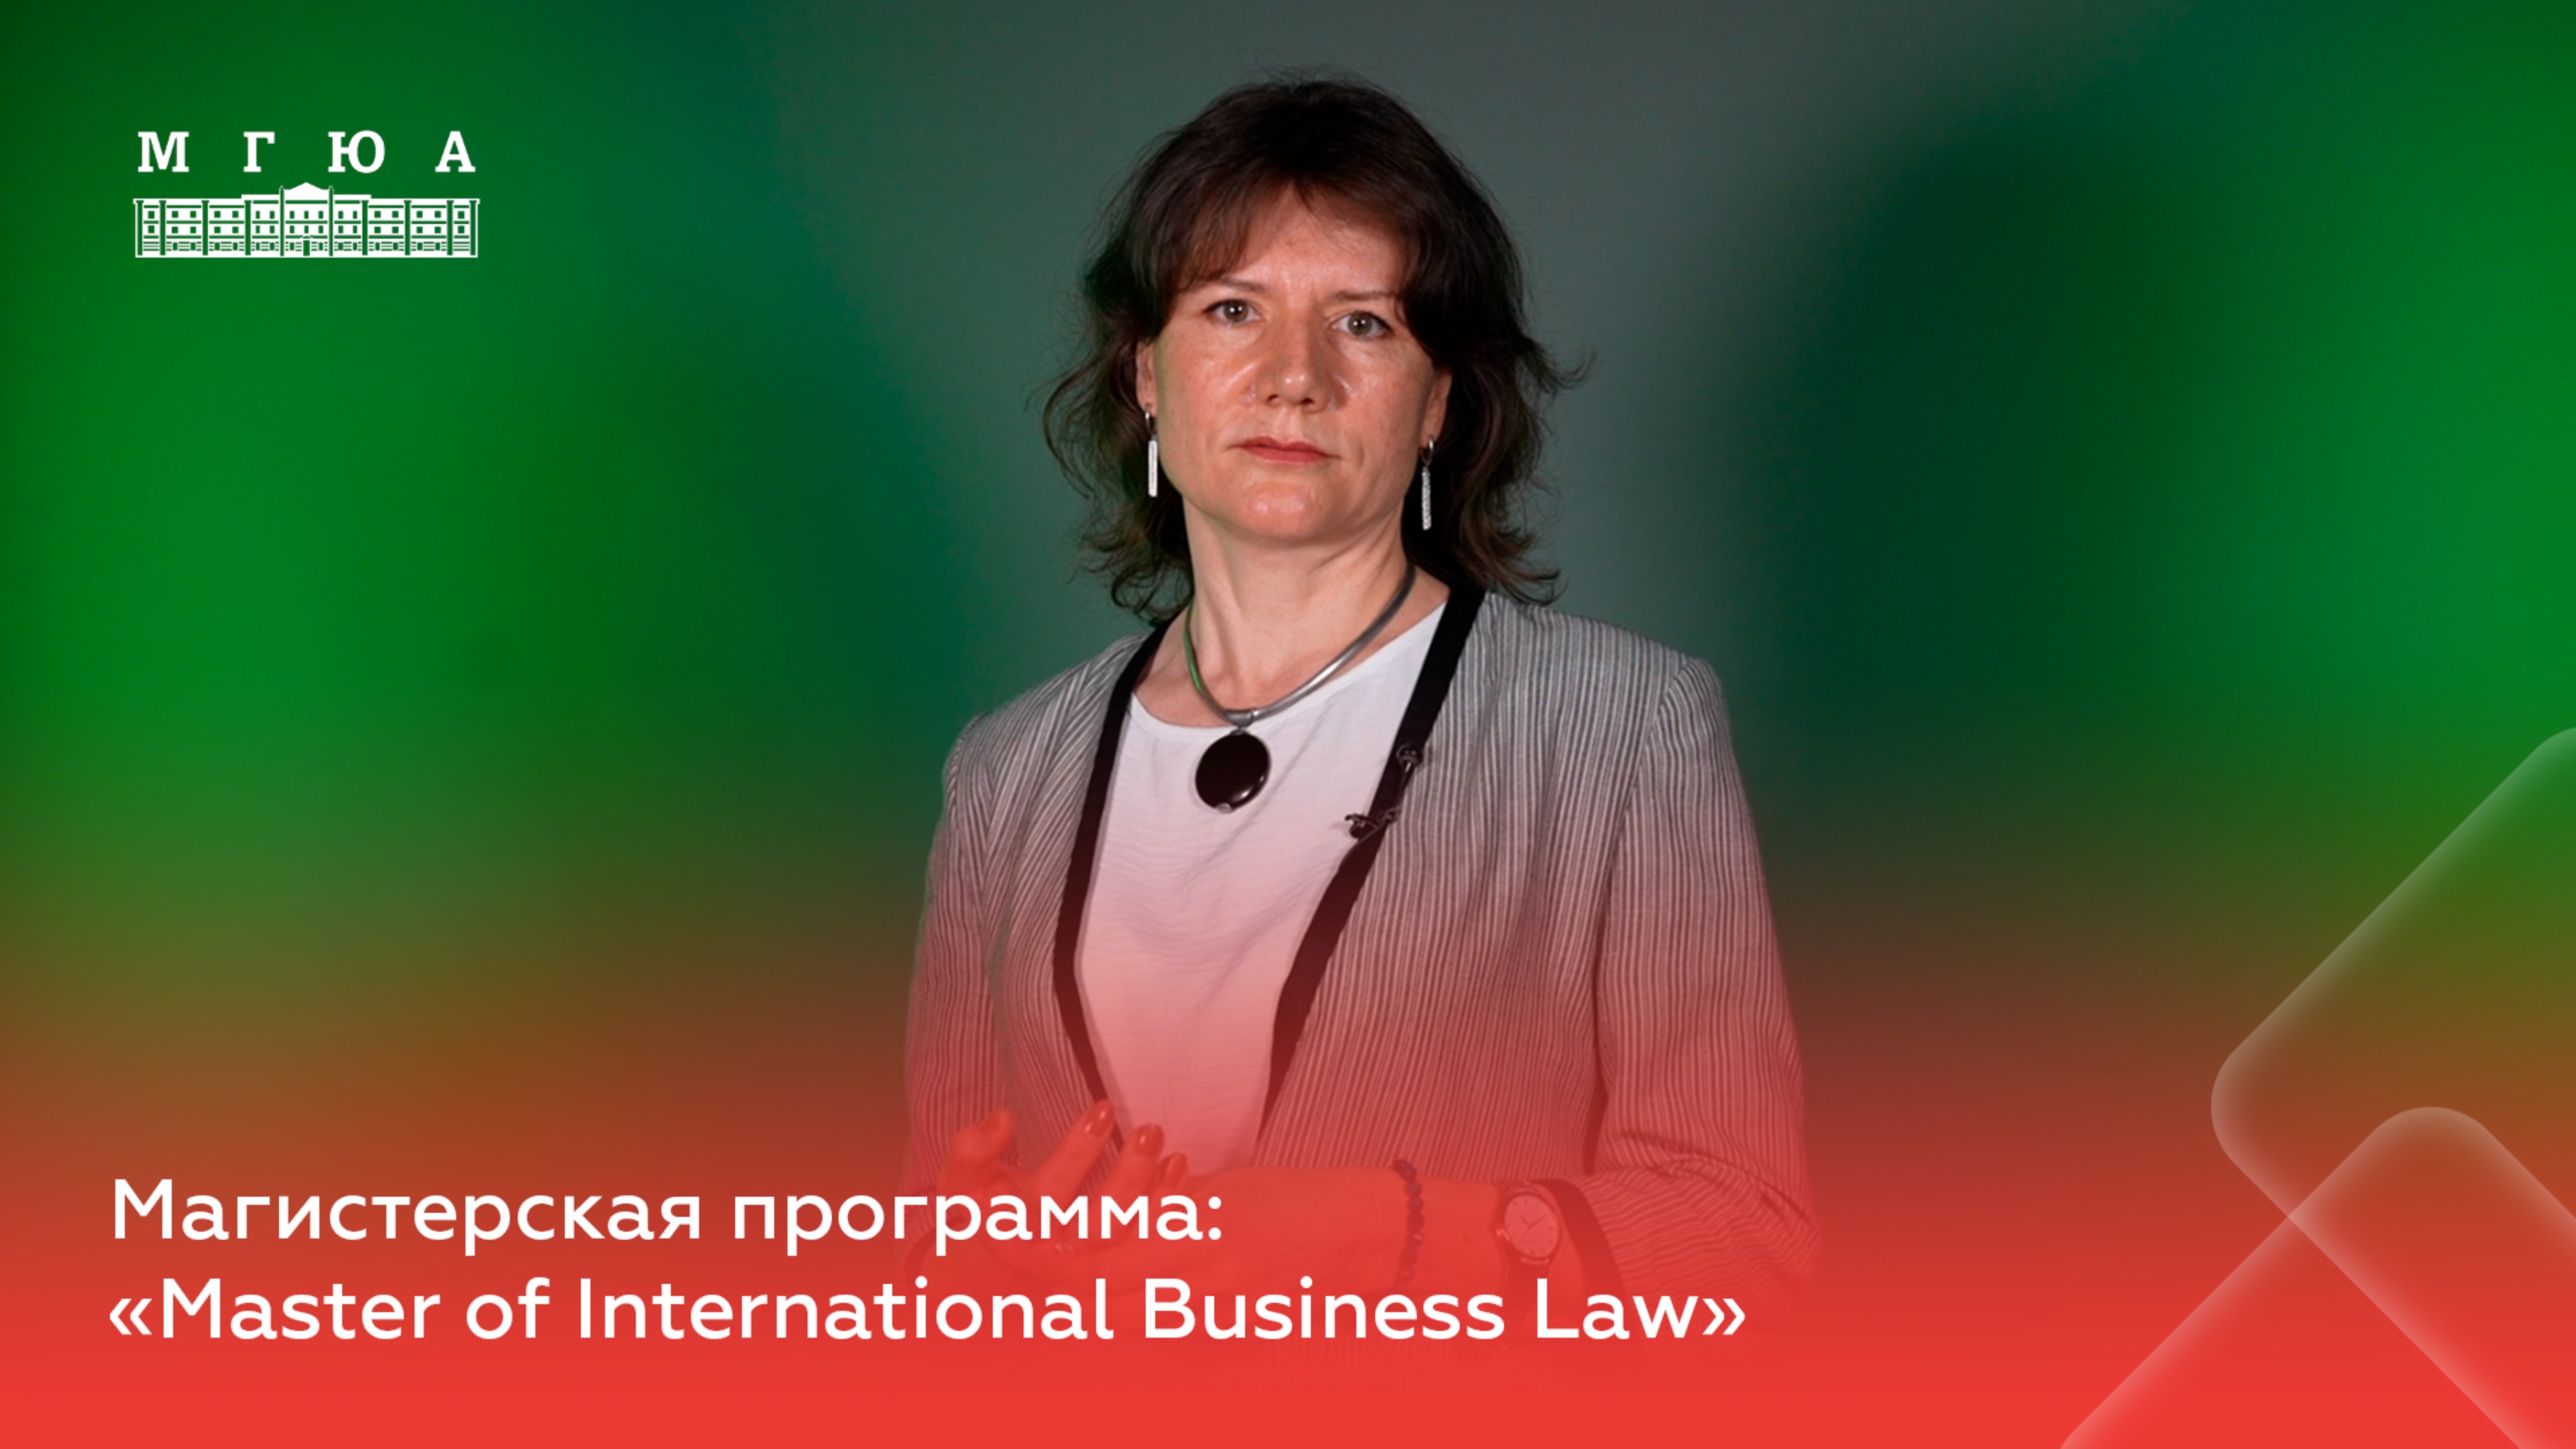 Магистерская программа: "Master of International Business Law"